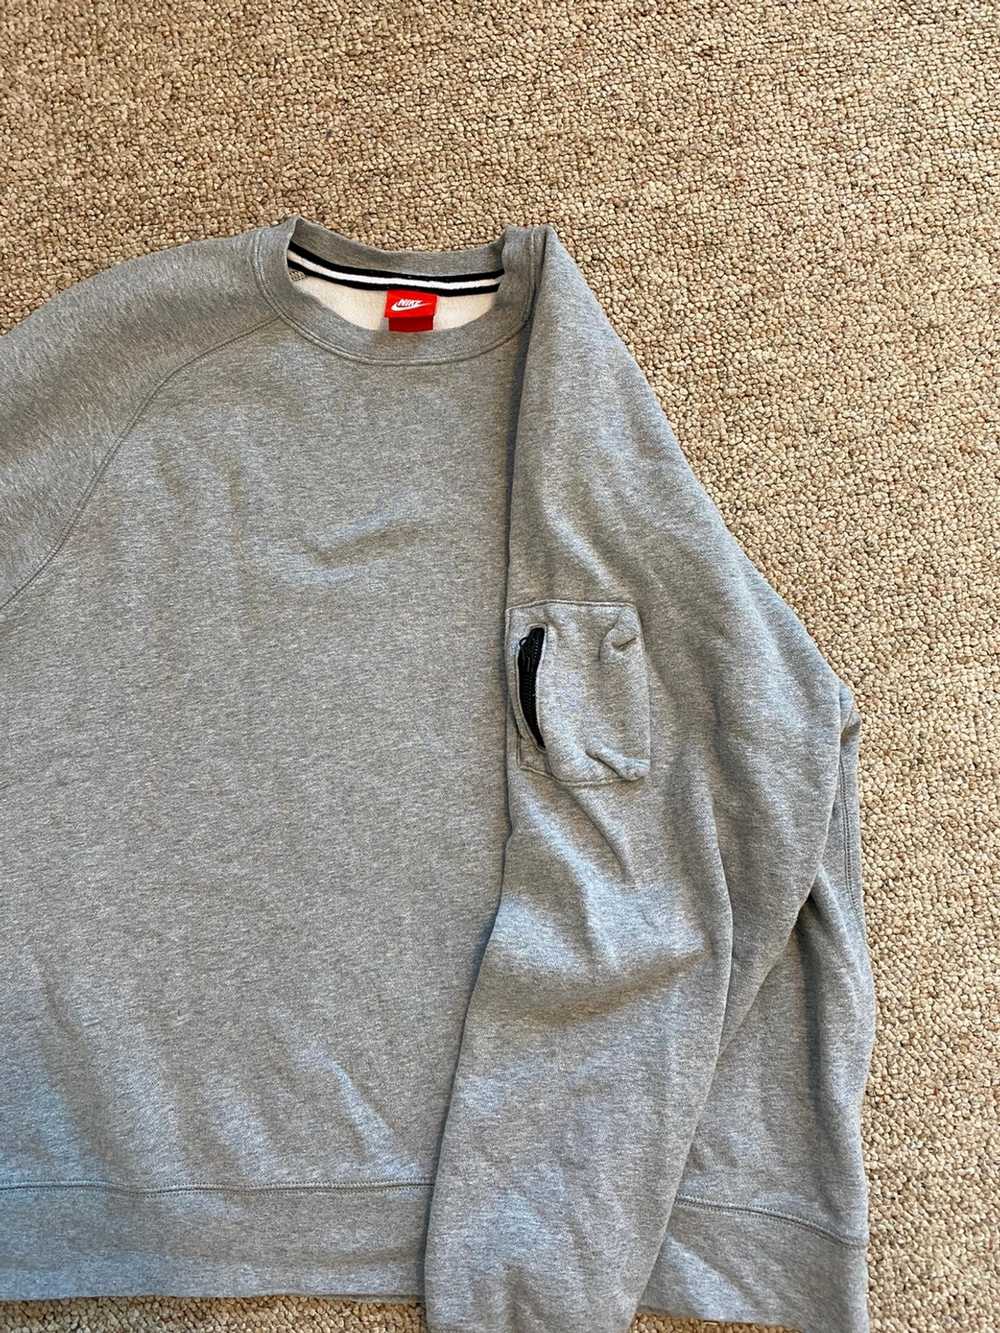 Nike Nike Crewneck Sweater - image 3